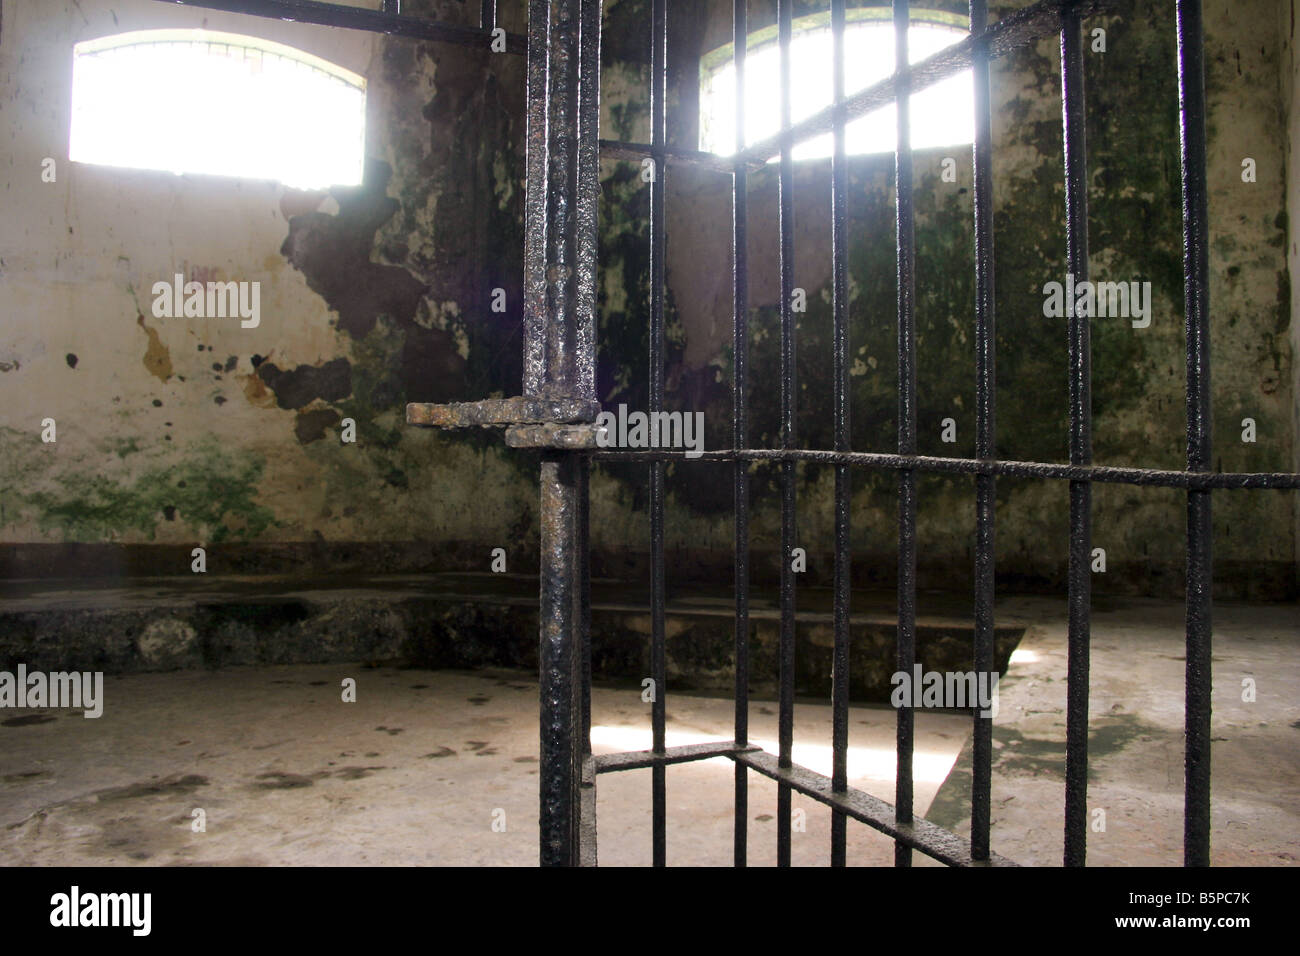 cell's entrance in Poulo Condor's prison, vietnam Stock Photo